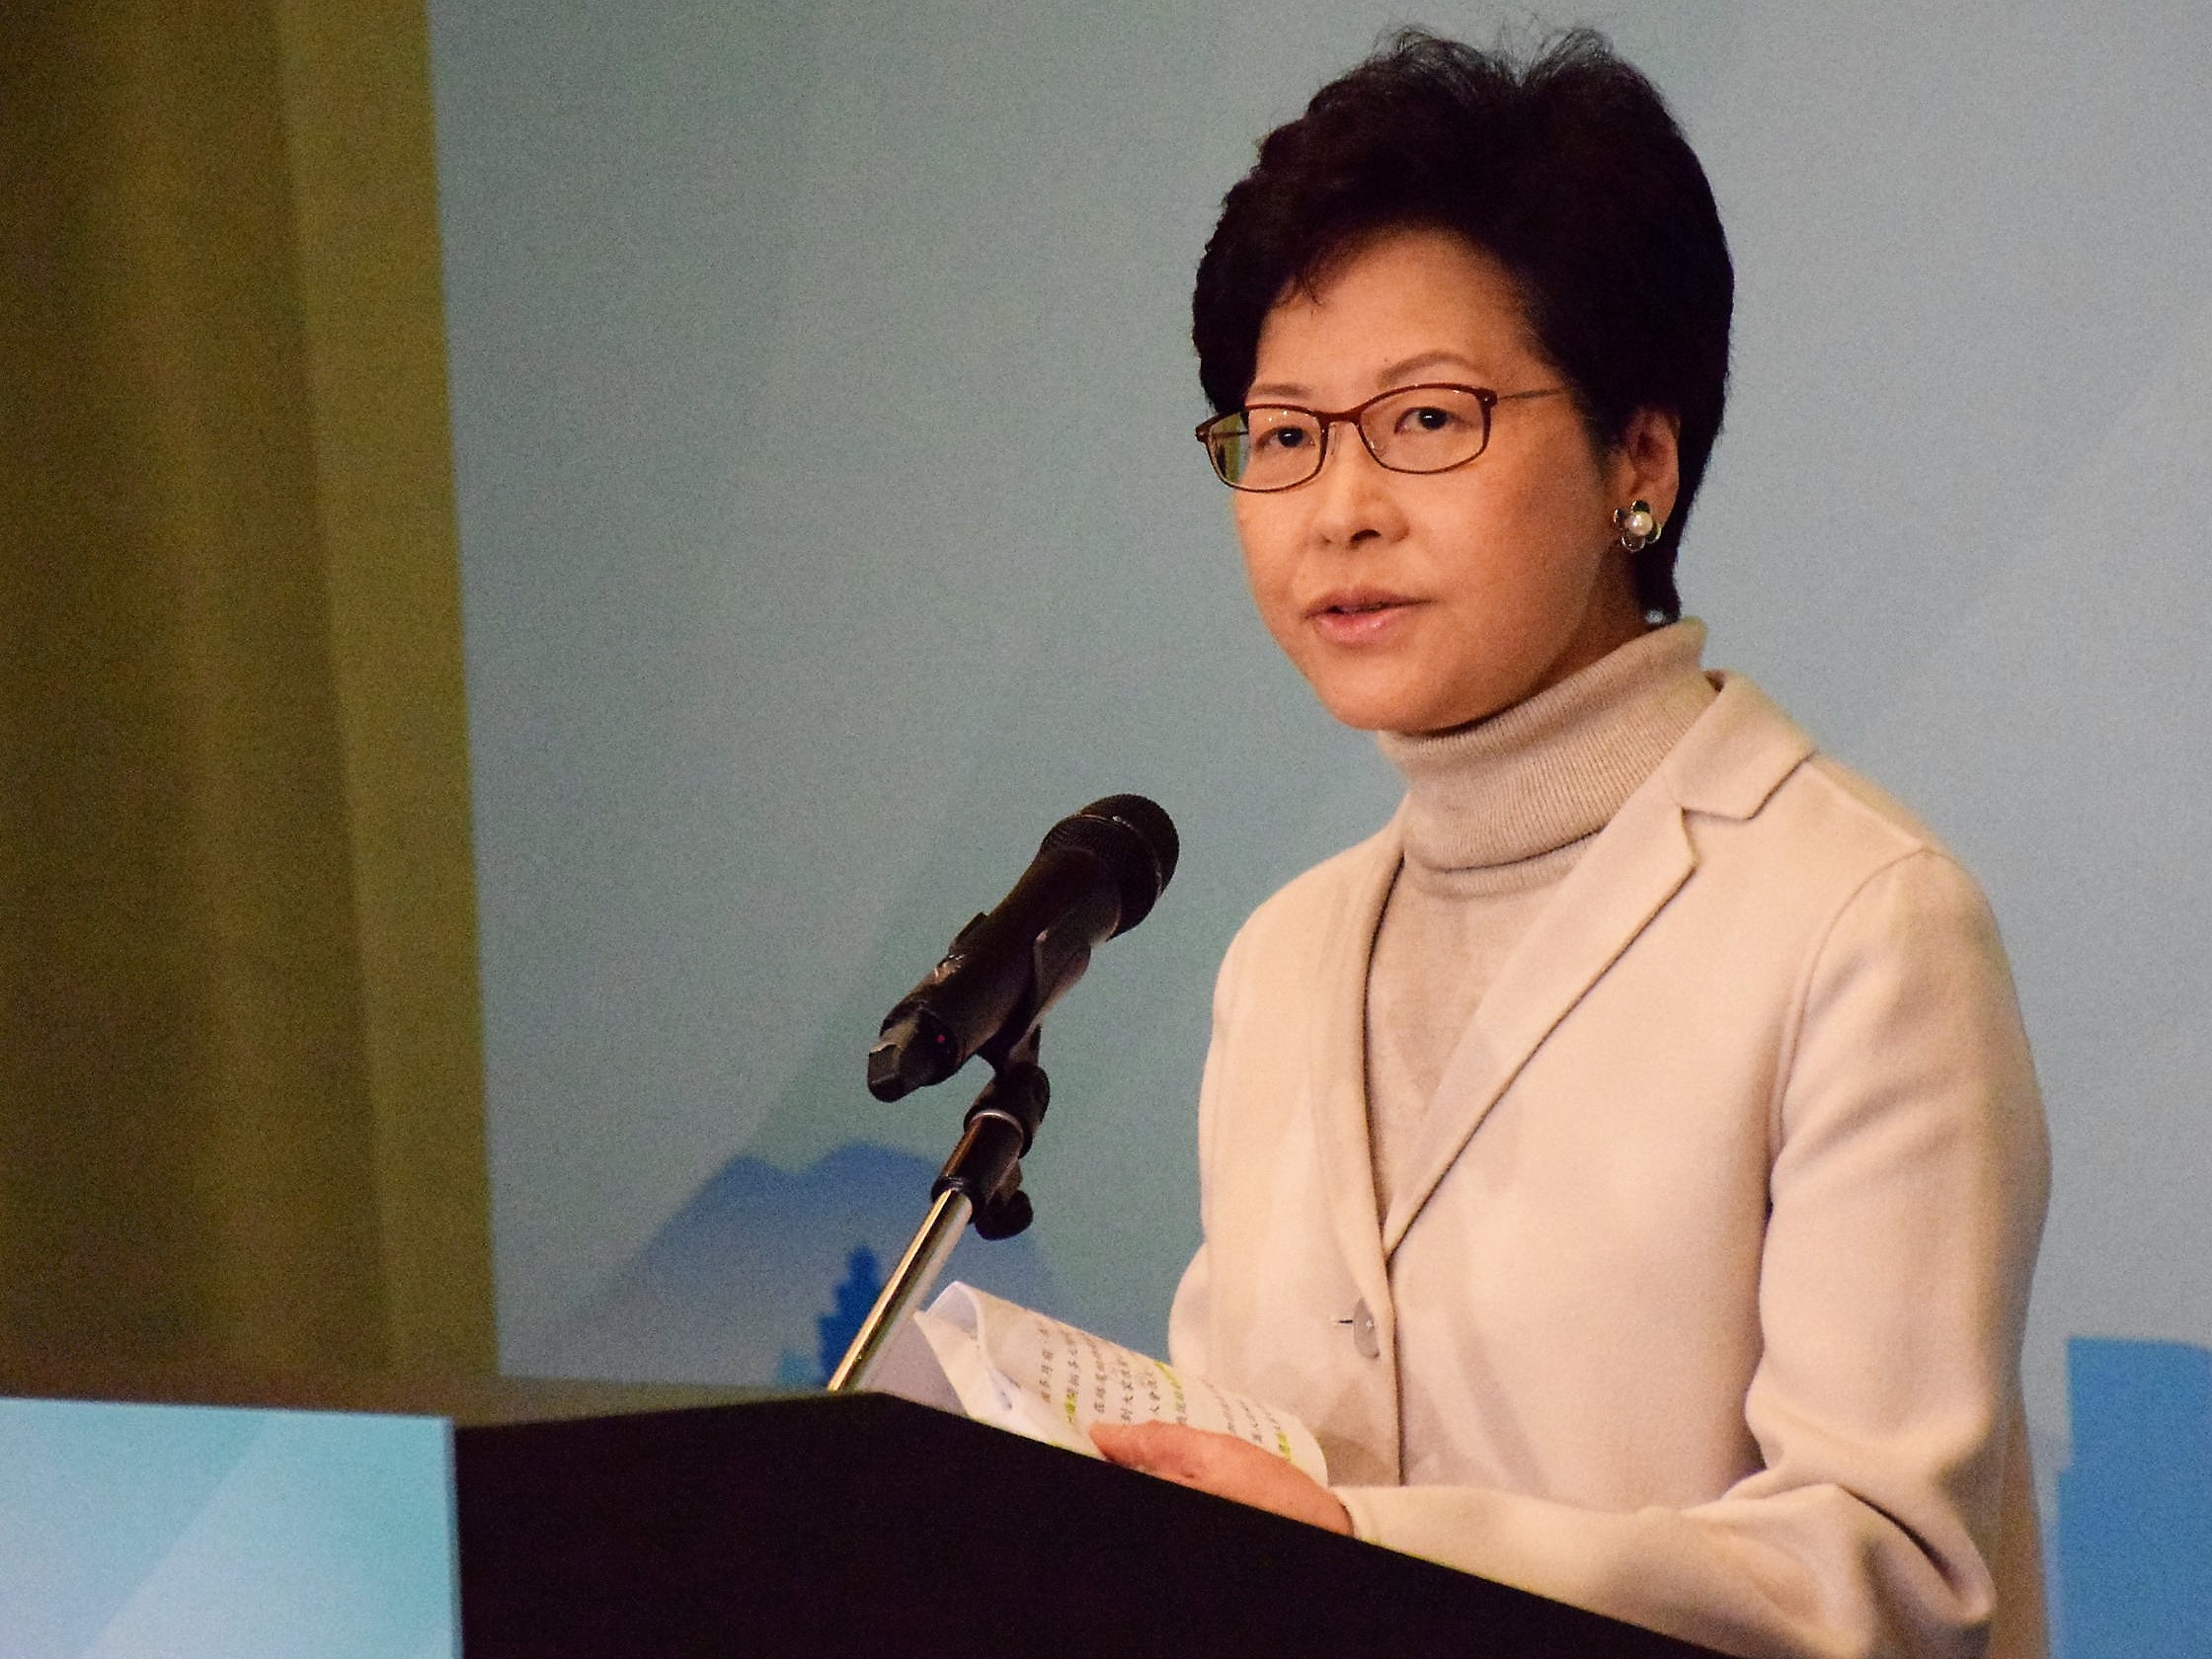 Hong Kong leader Carrie Lam